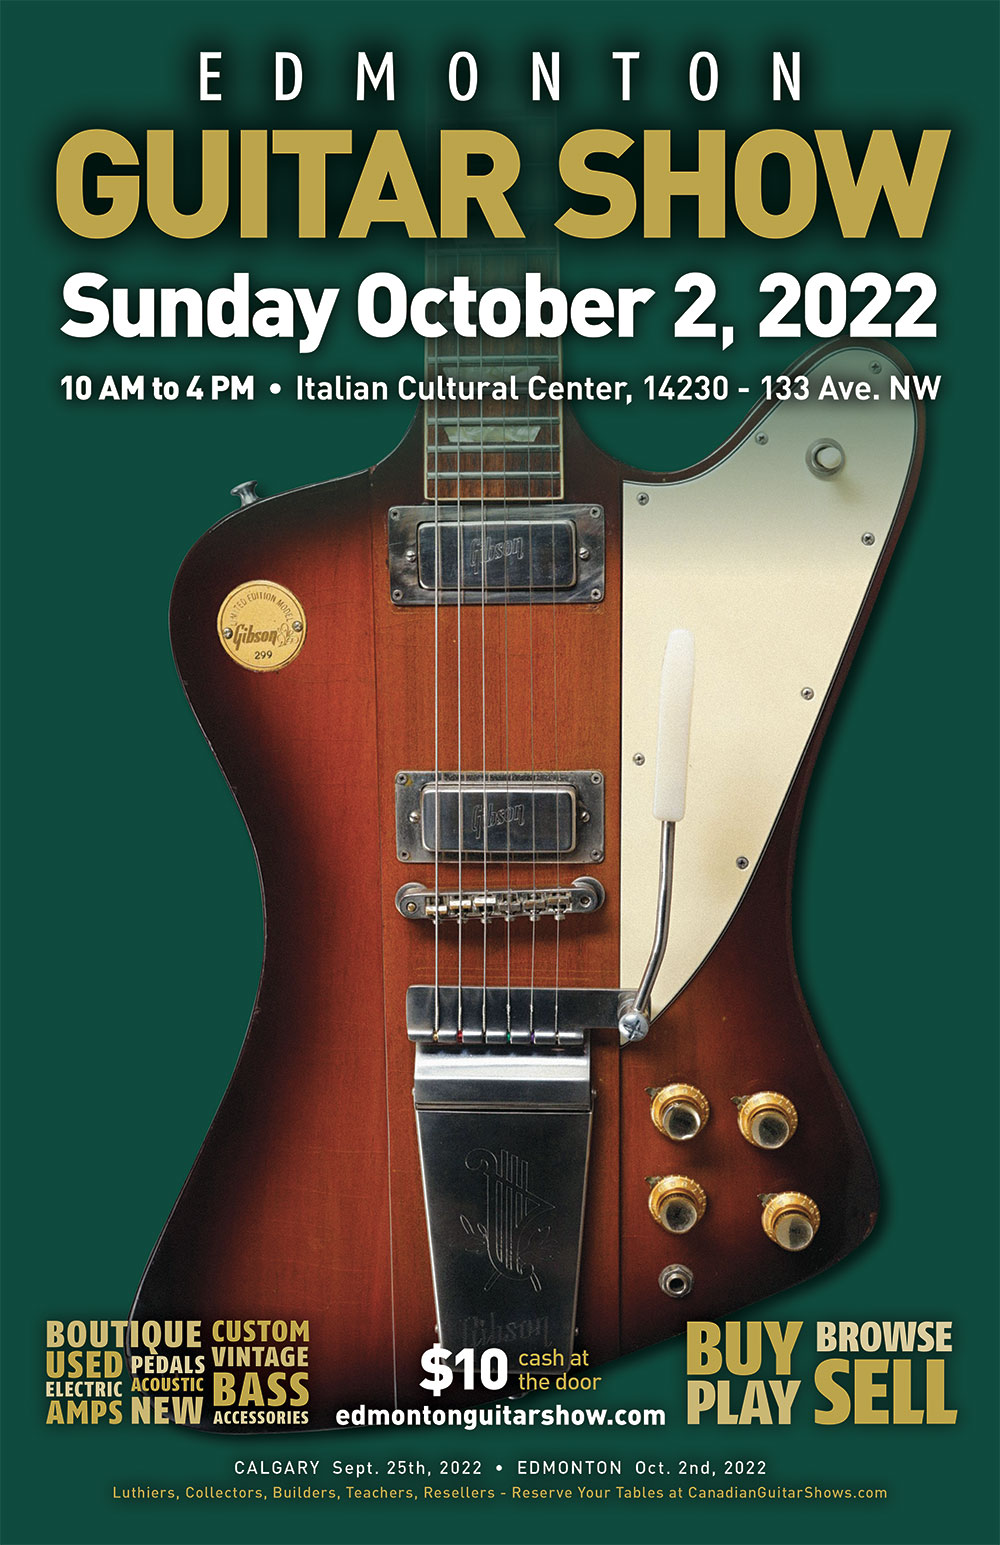 Edmonton Guitar Show, Sunday October 2nd, 2022, Italian Cultural Center, Edmonton AB